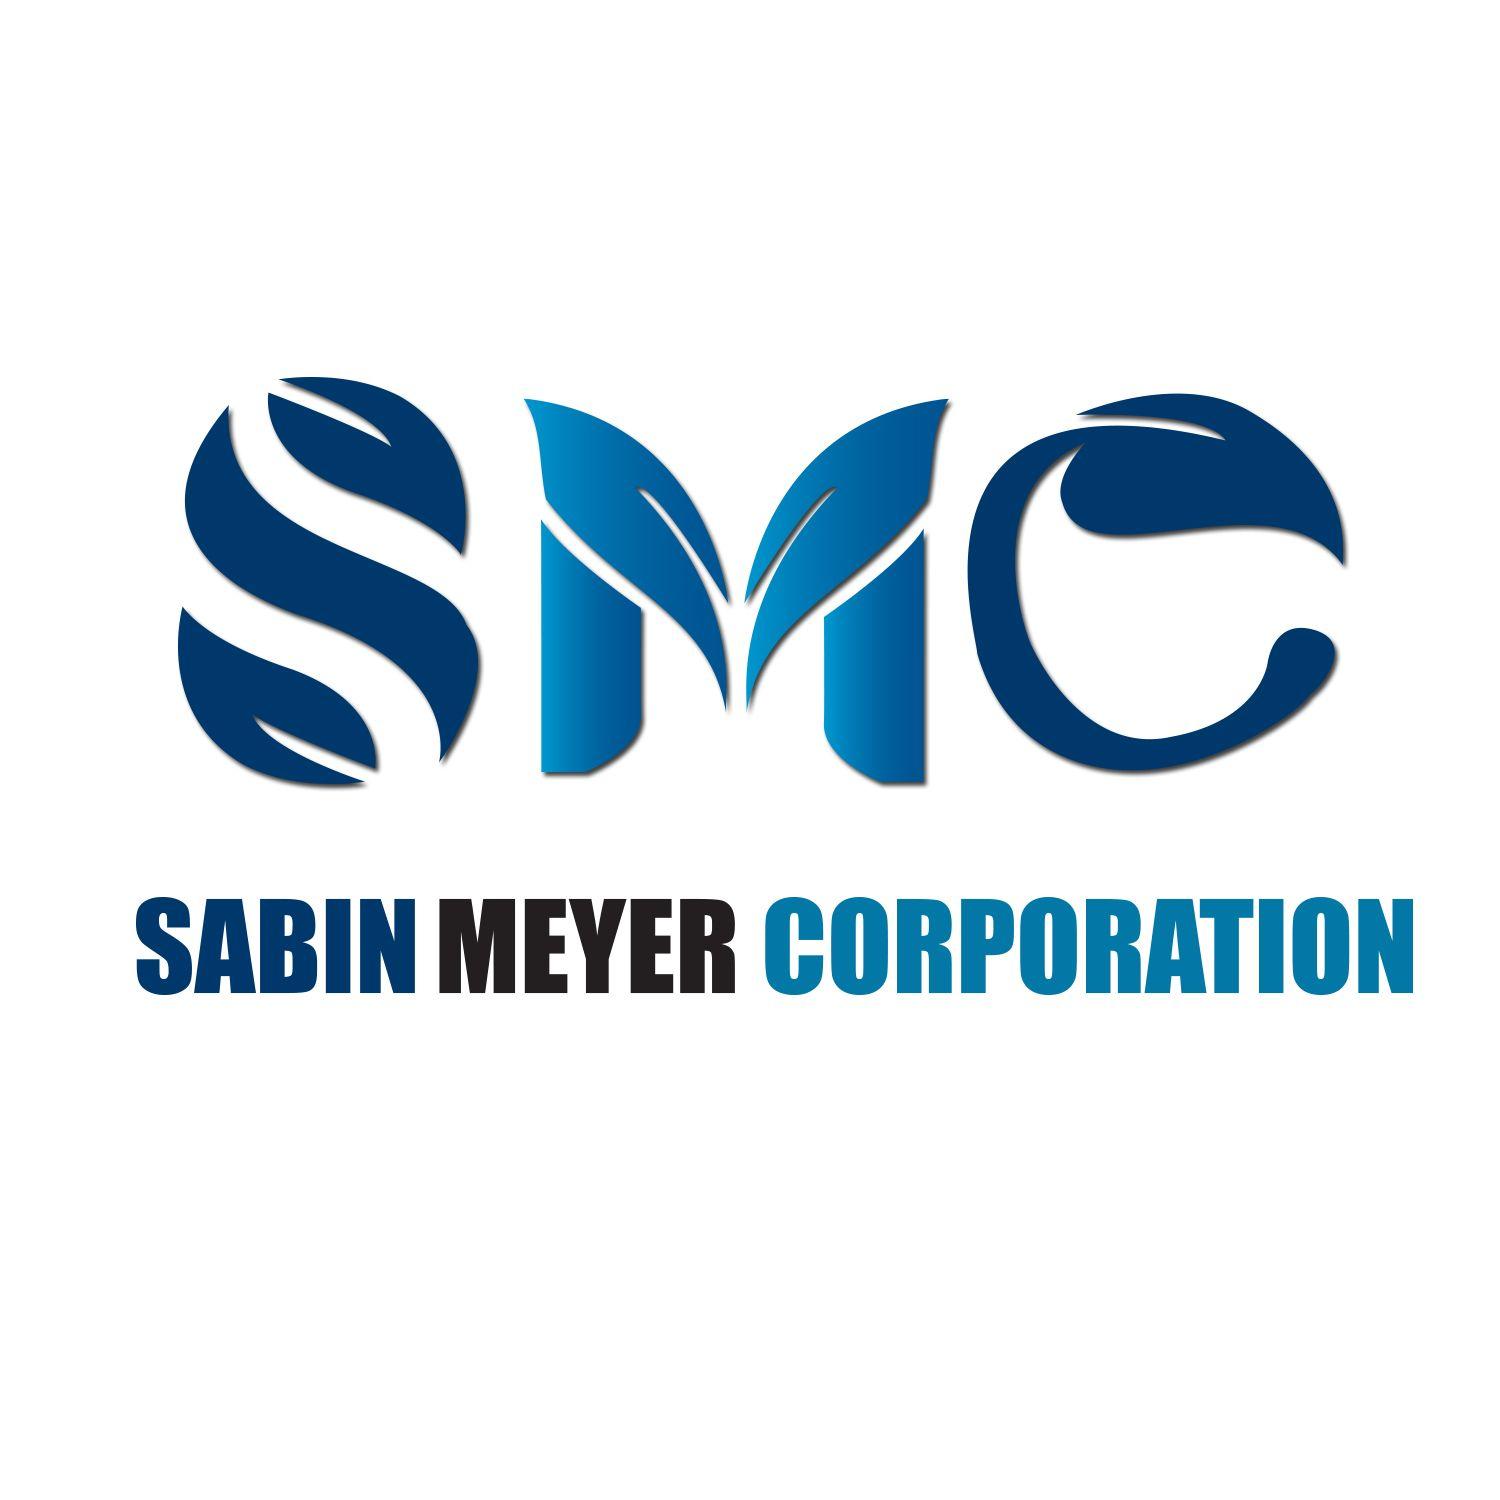 SMC Logo - Modern, Professional, Marketing Logo Design for SMC